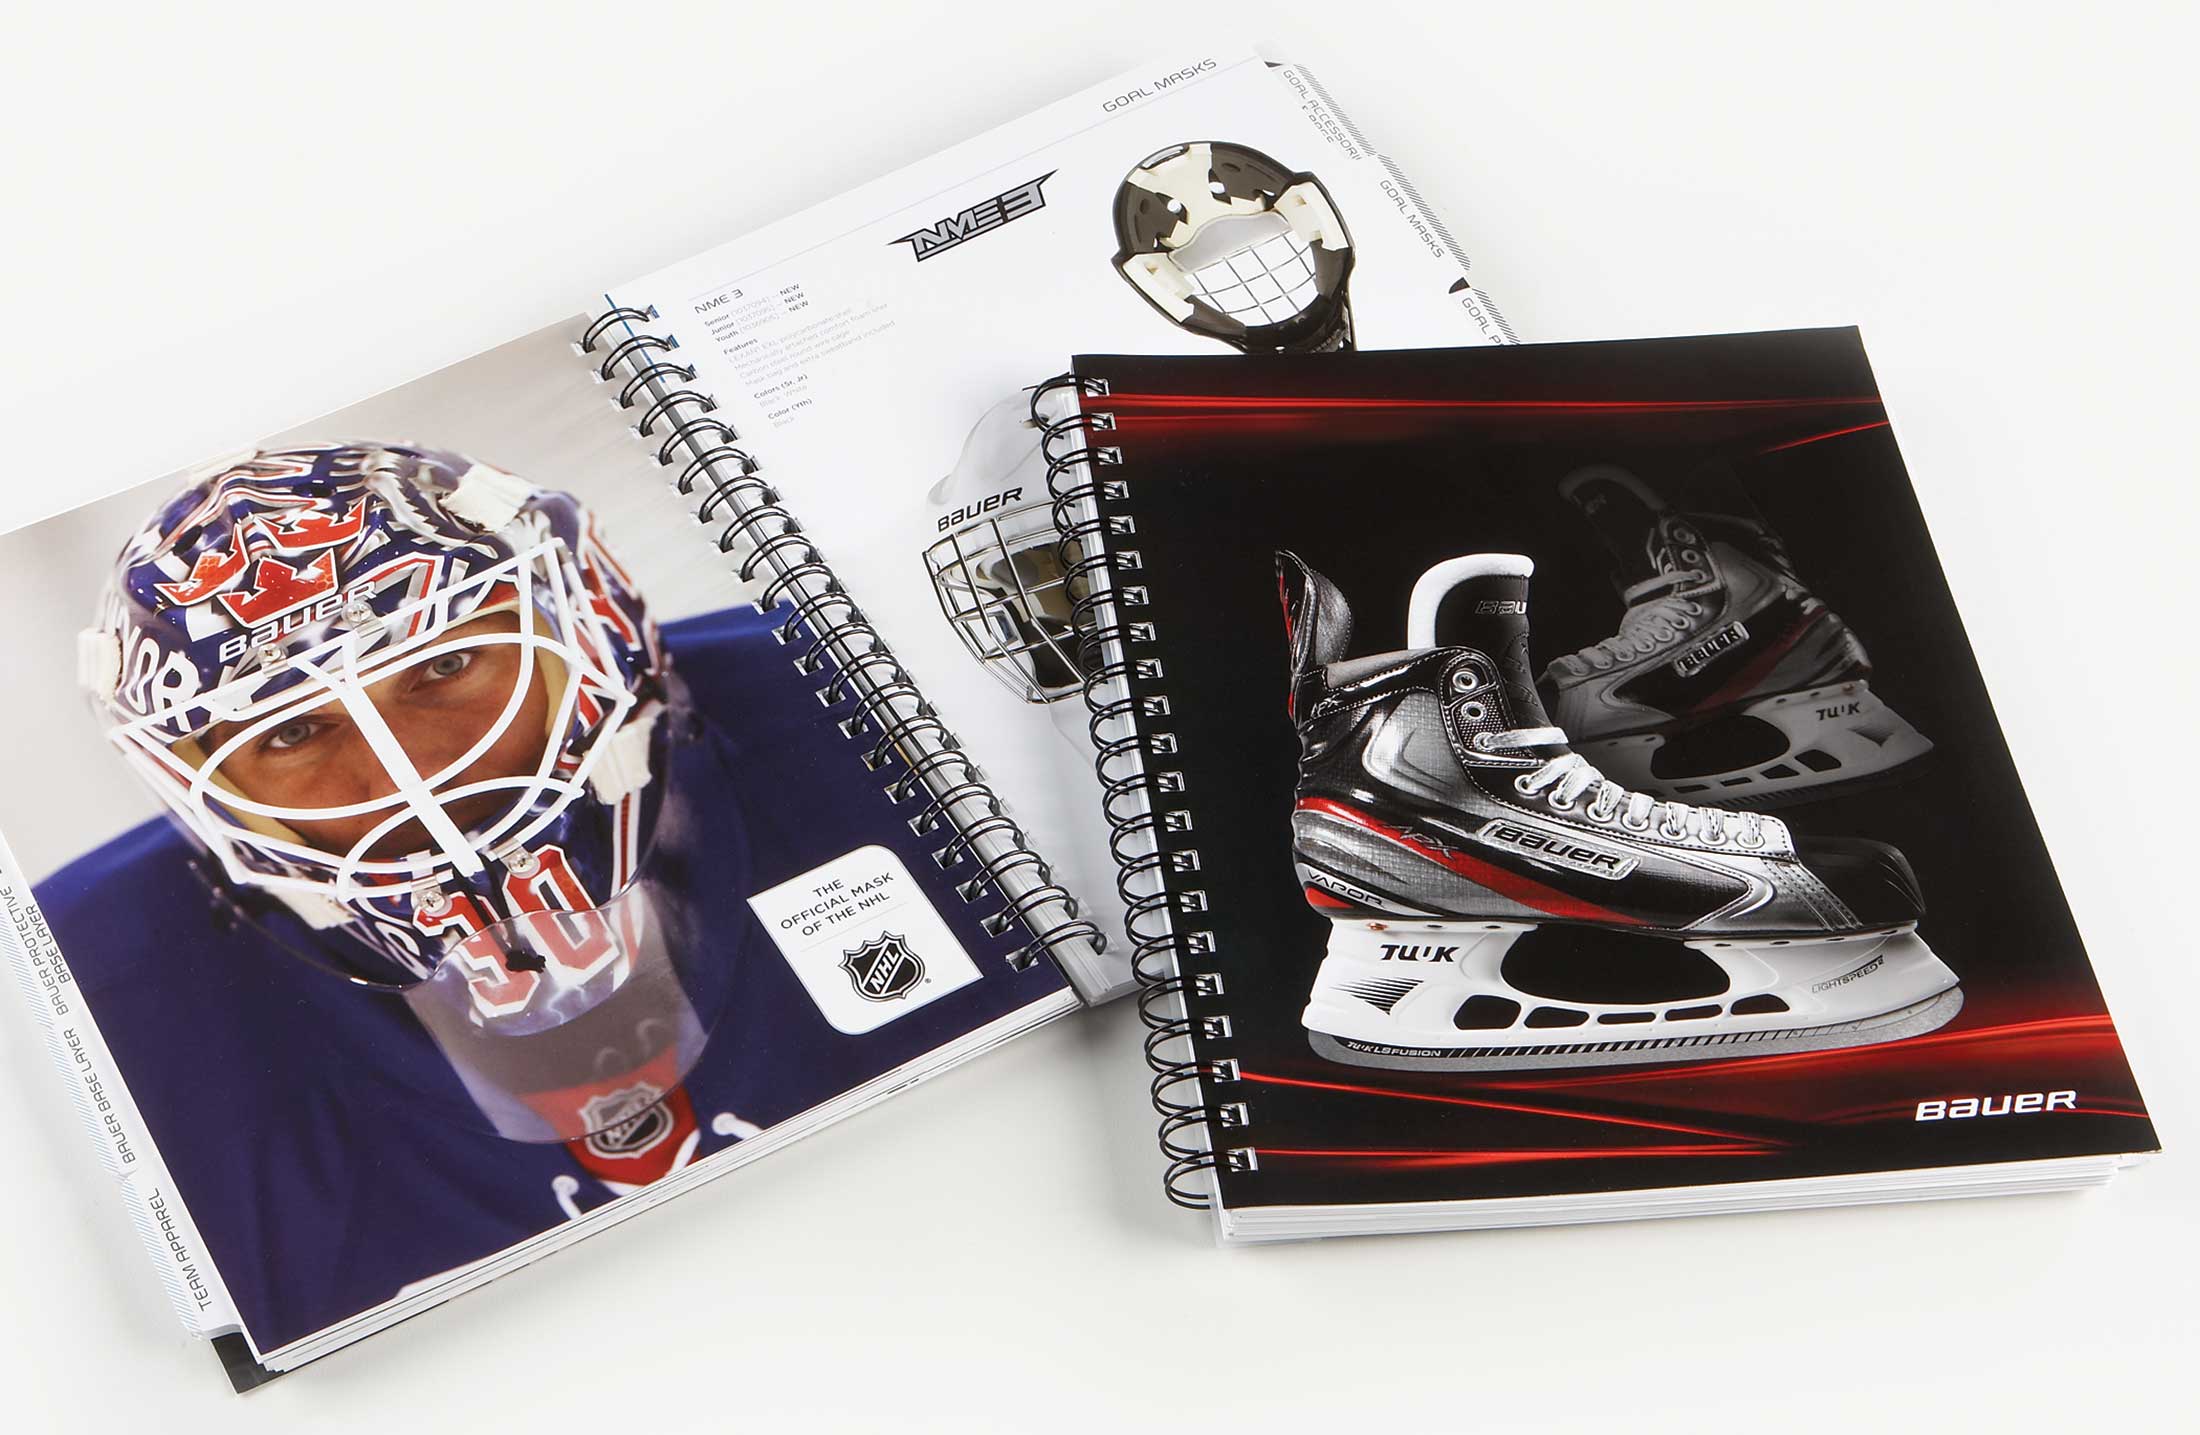 Bauer Hockey catalog spread